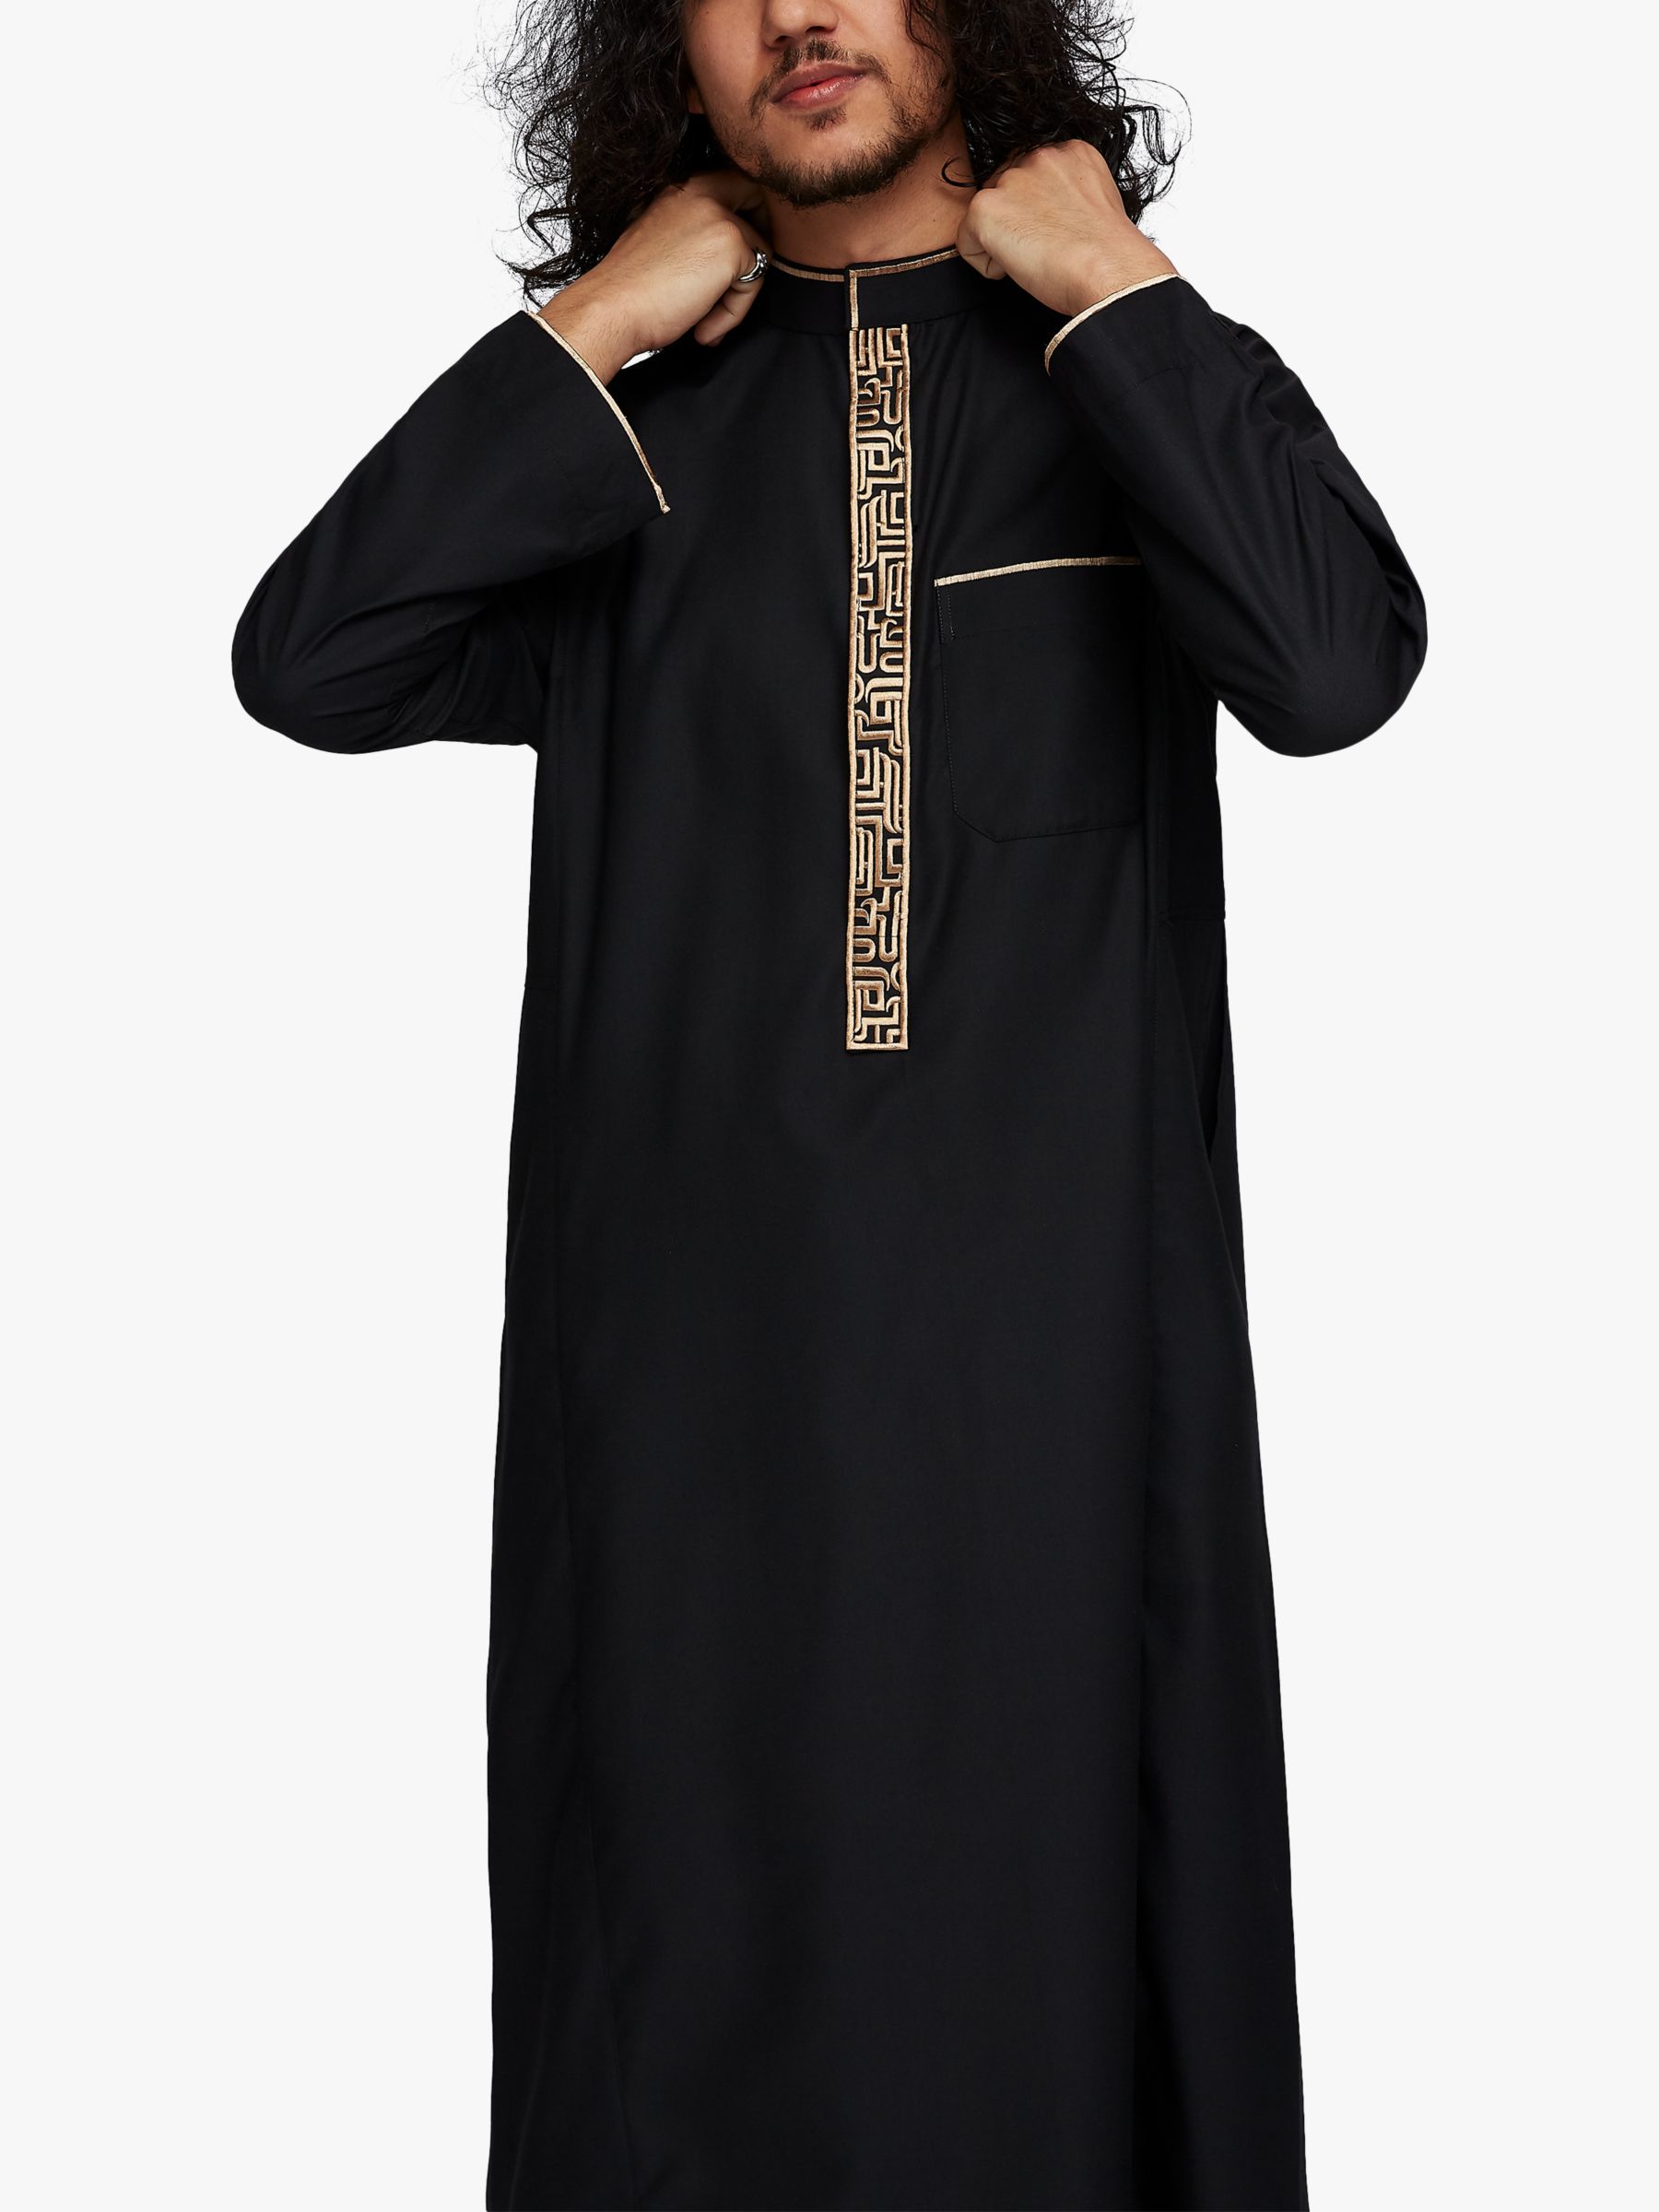 Buy Islamic Impressions Sultan Thobe Jubbah Online at johnlewis.com